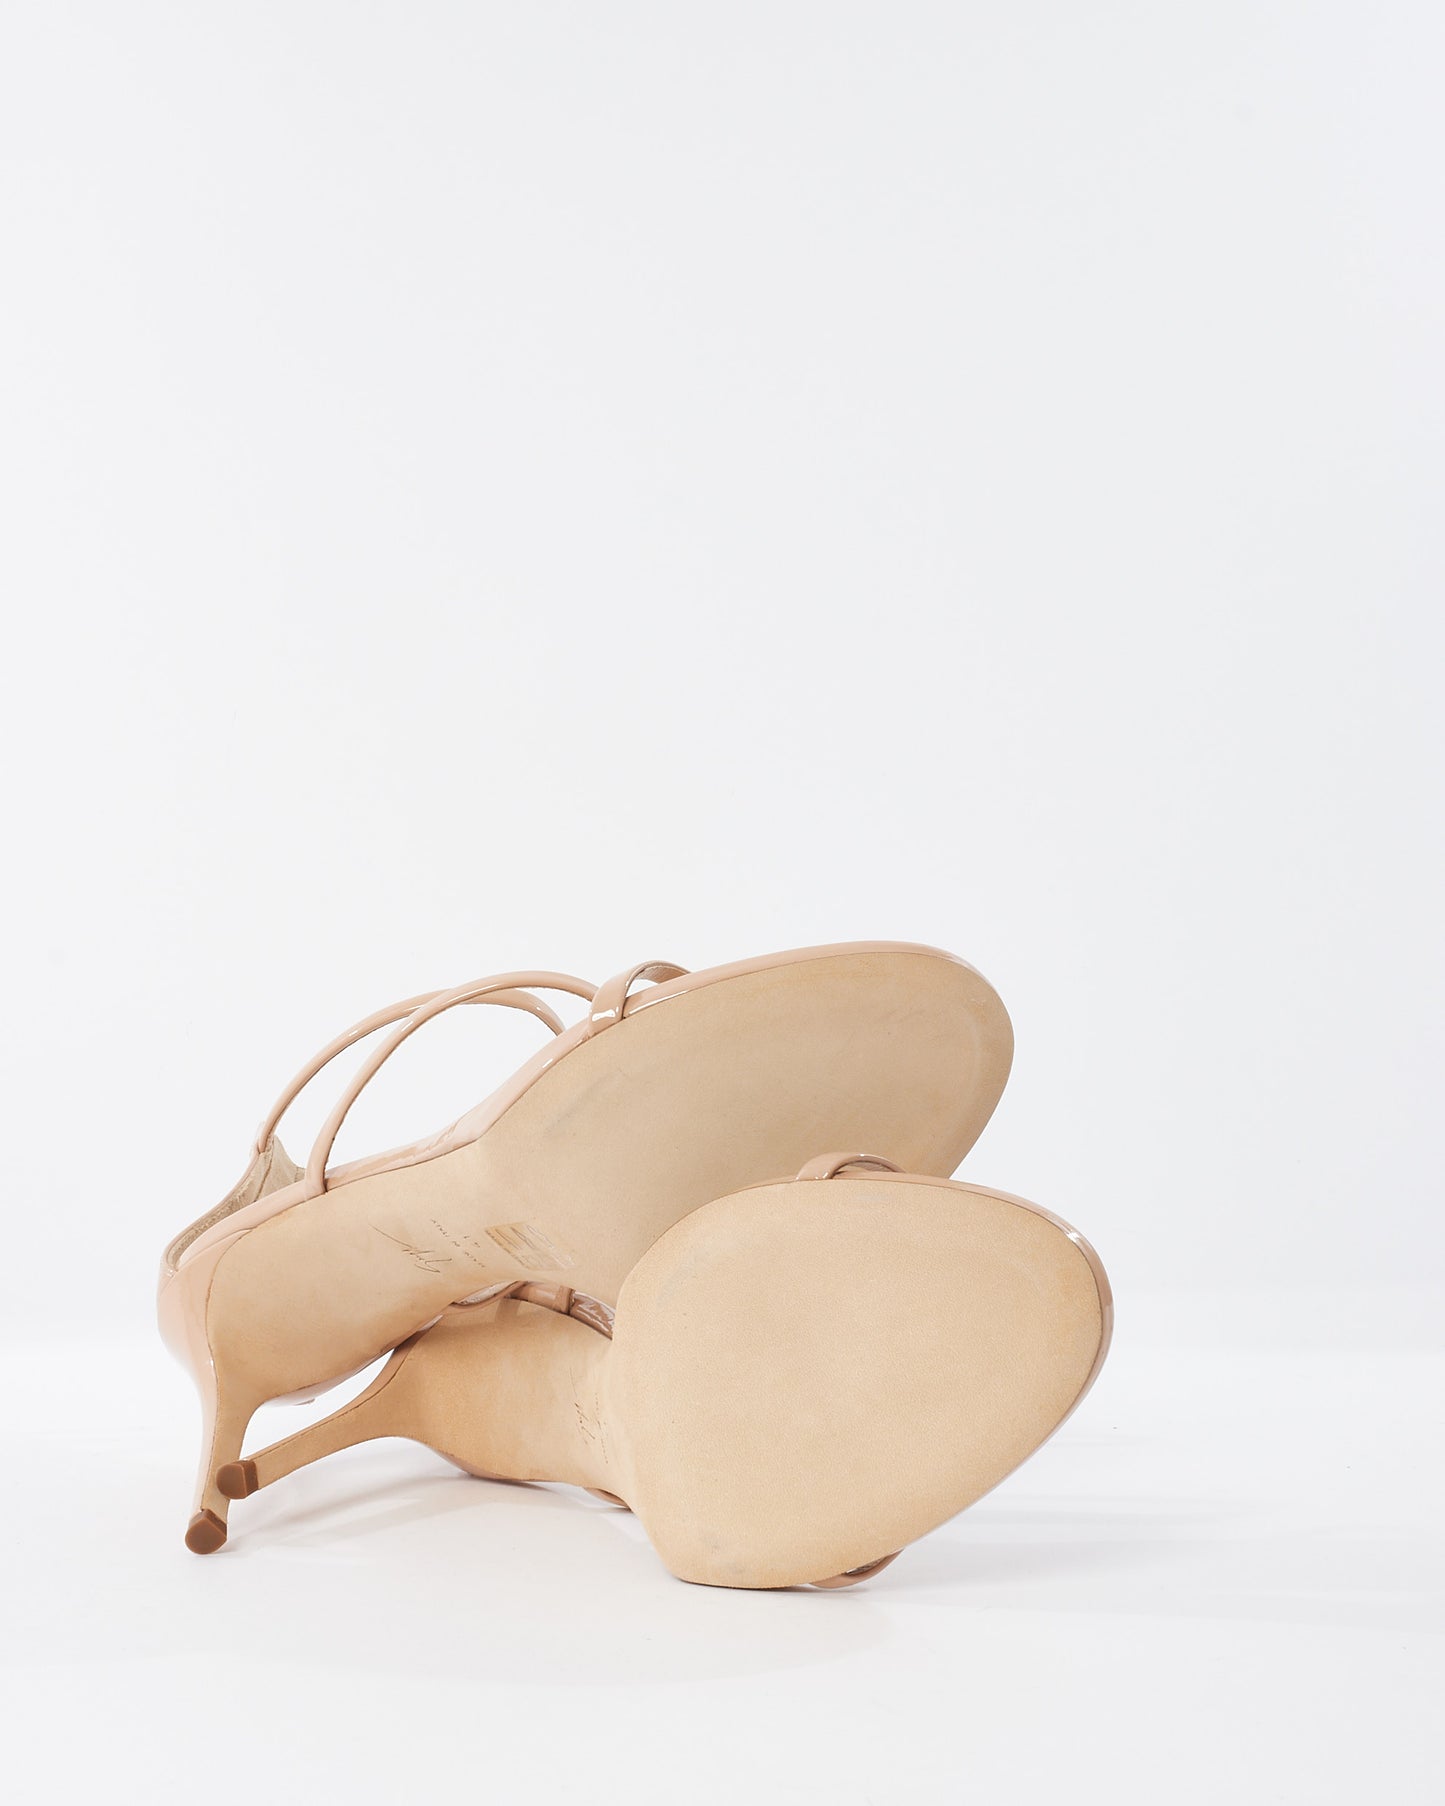 Giuseppe Zanotti Beige Patent Leather Harmony Sandals - 41